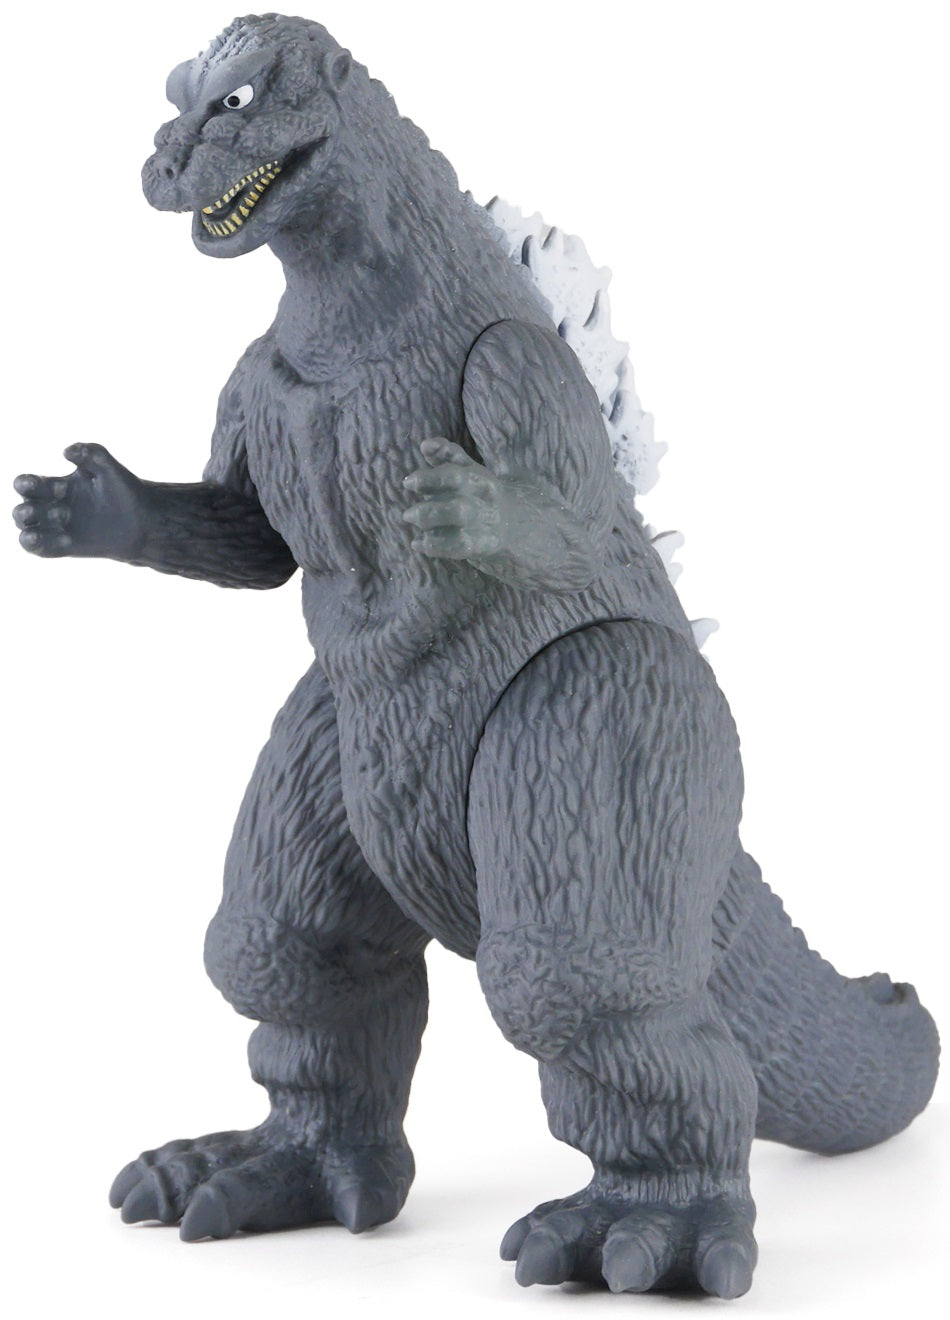 Movie Monster Series: Godzilla (1954)